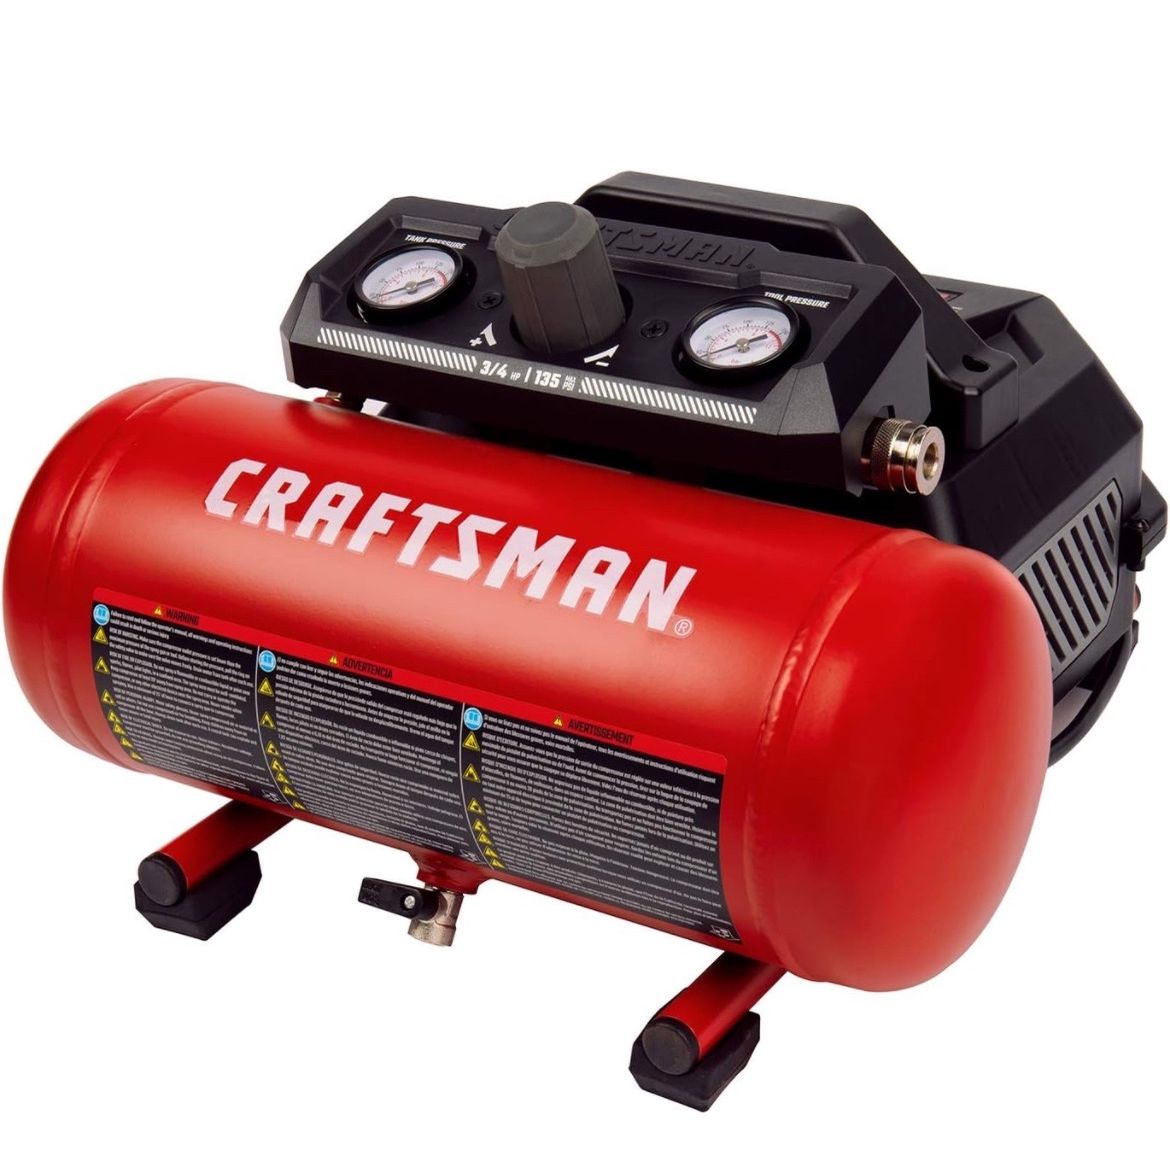 Craftsman Air Compressor, 1.5 Gallon